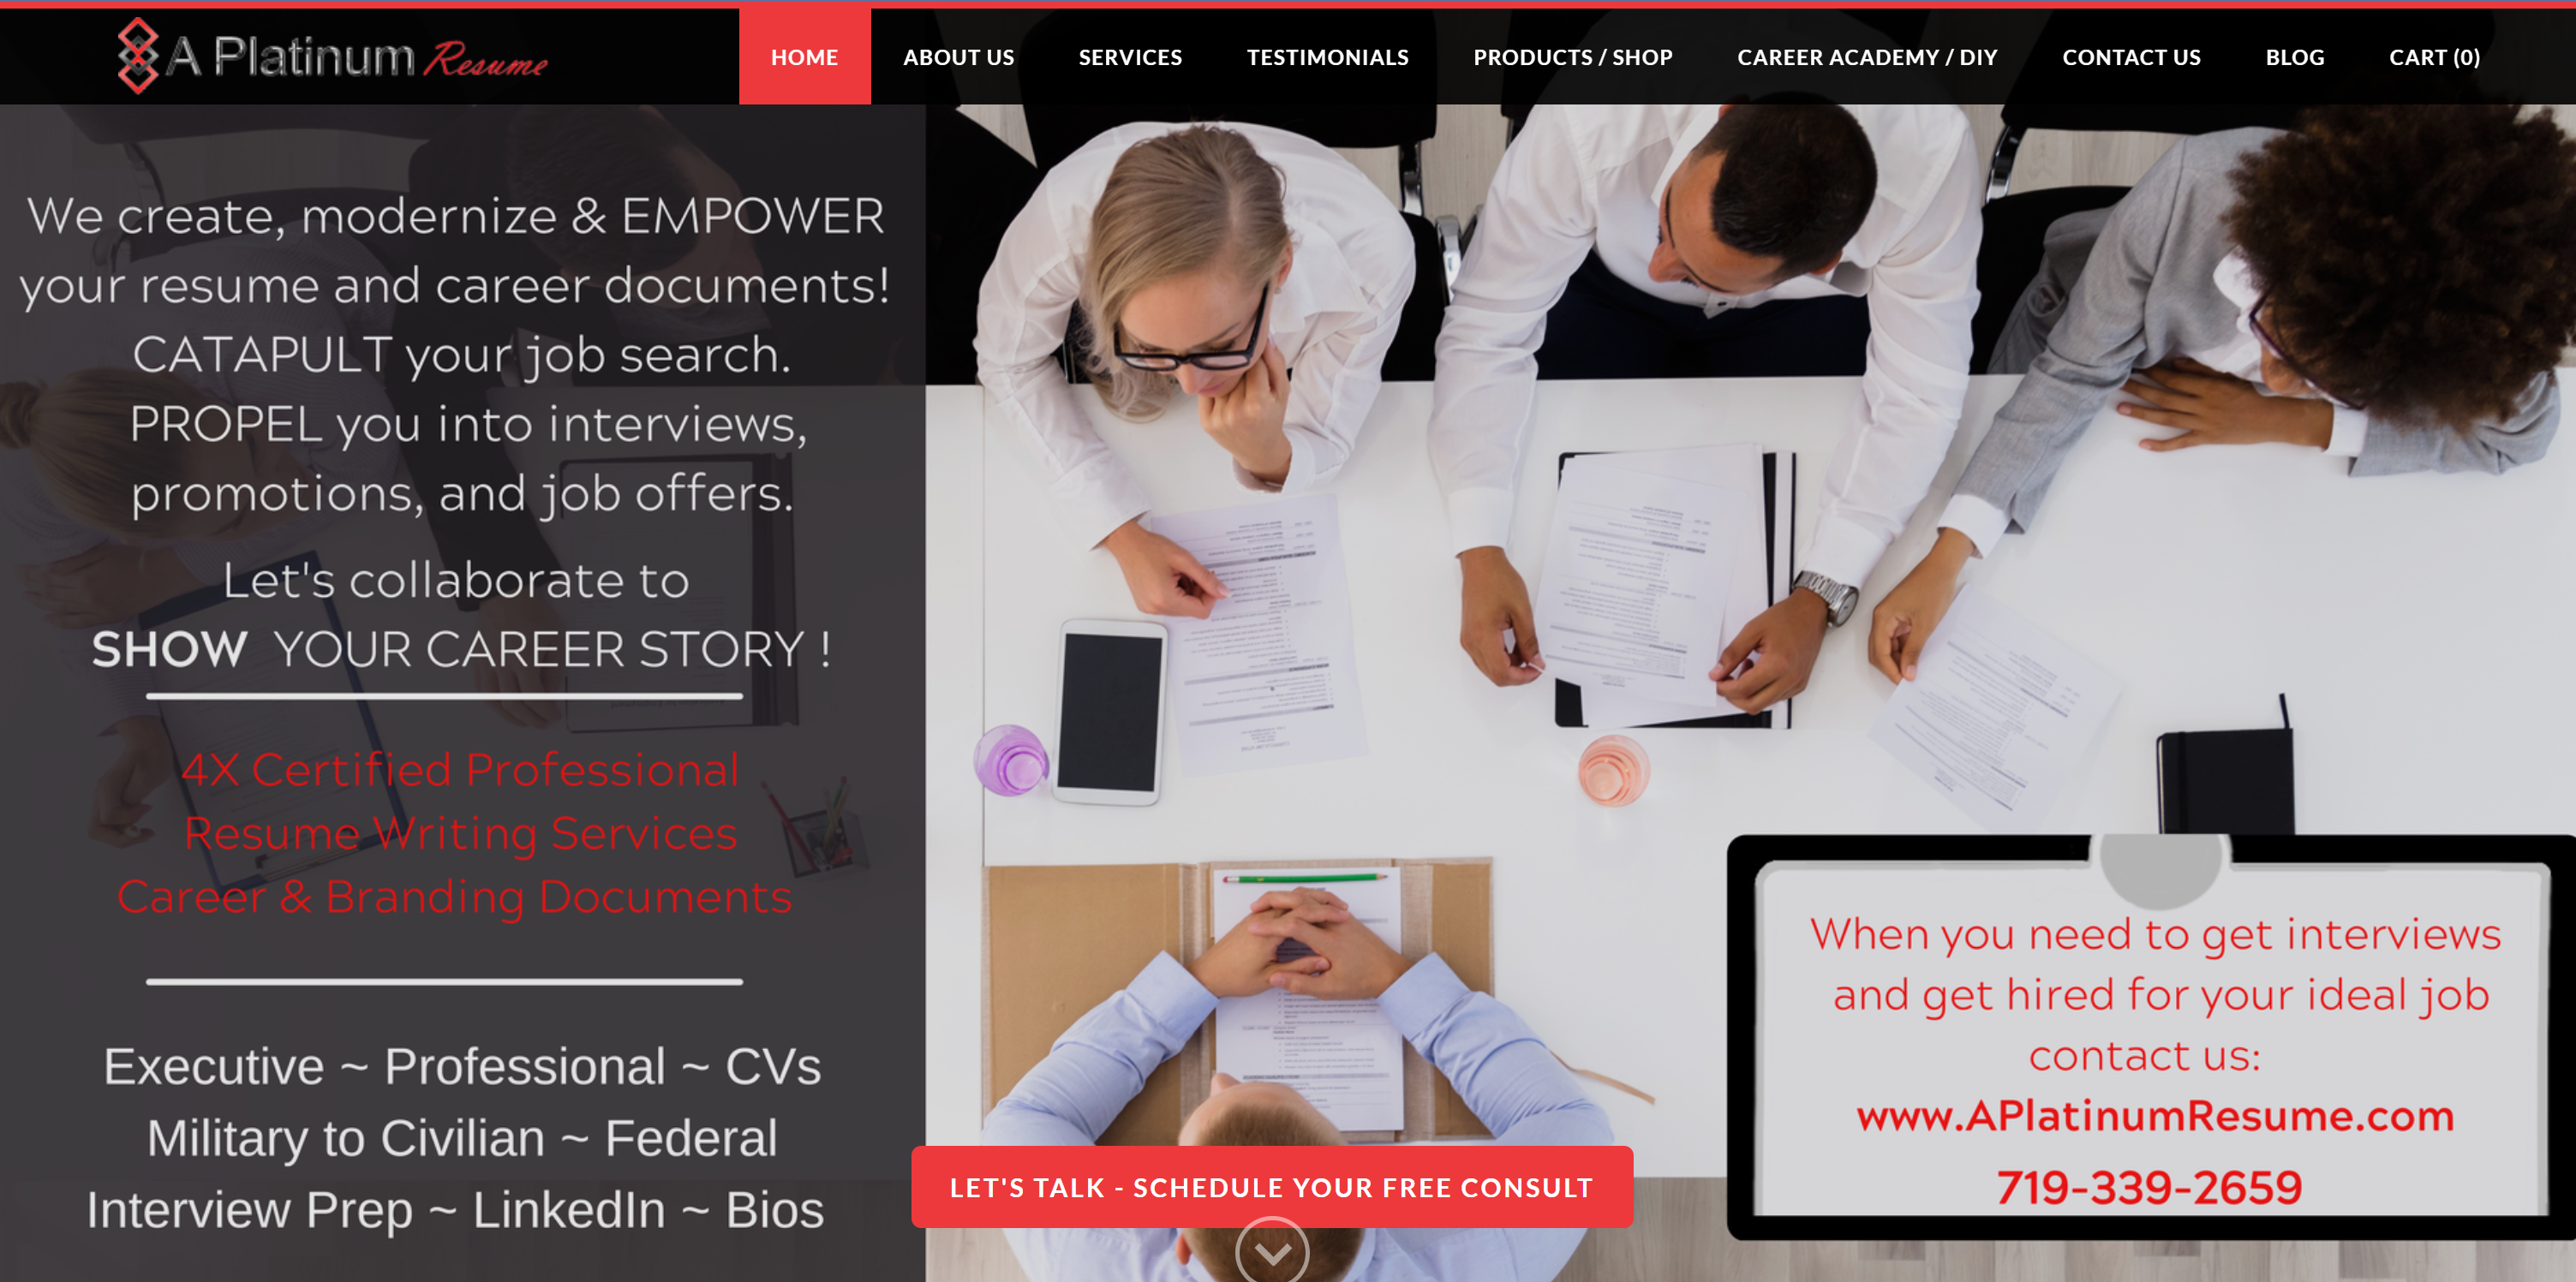 A Platinum Resume Homepage